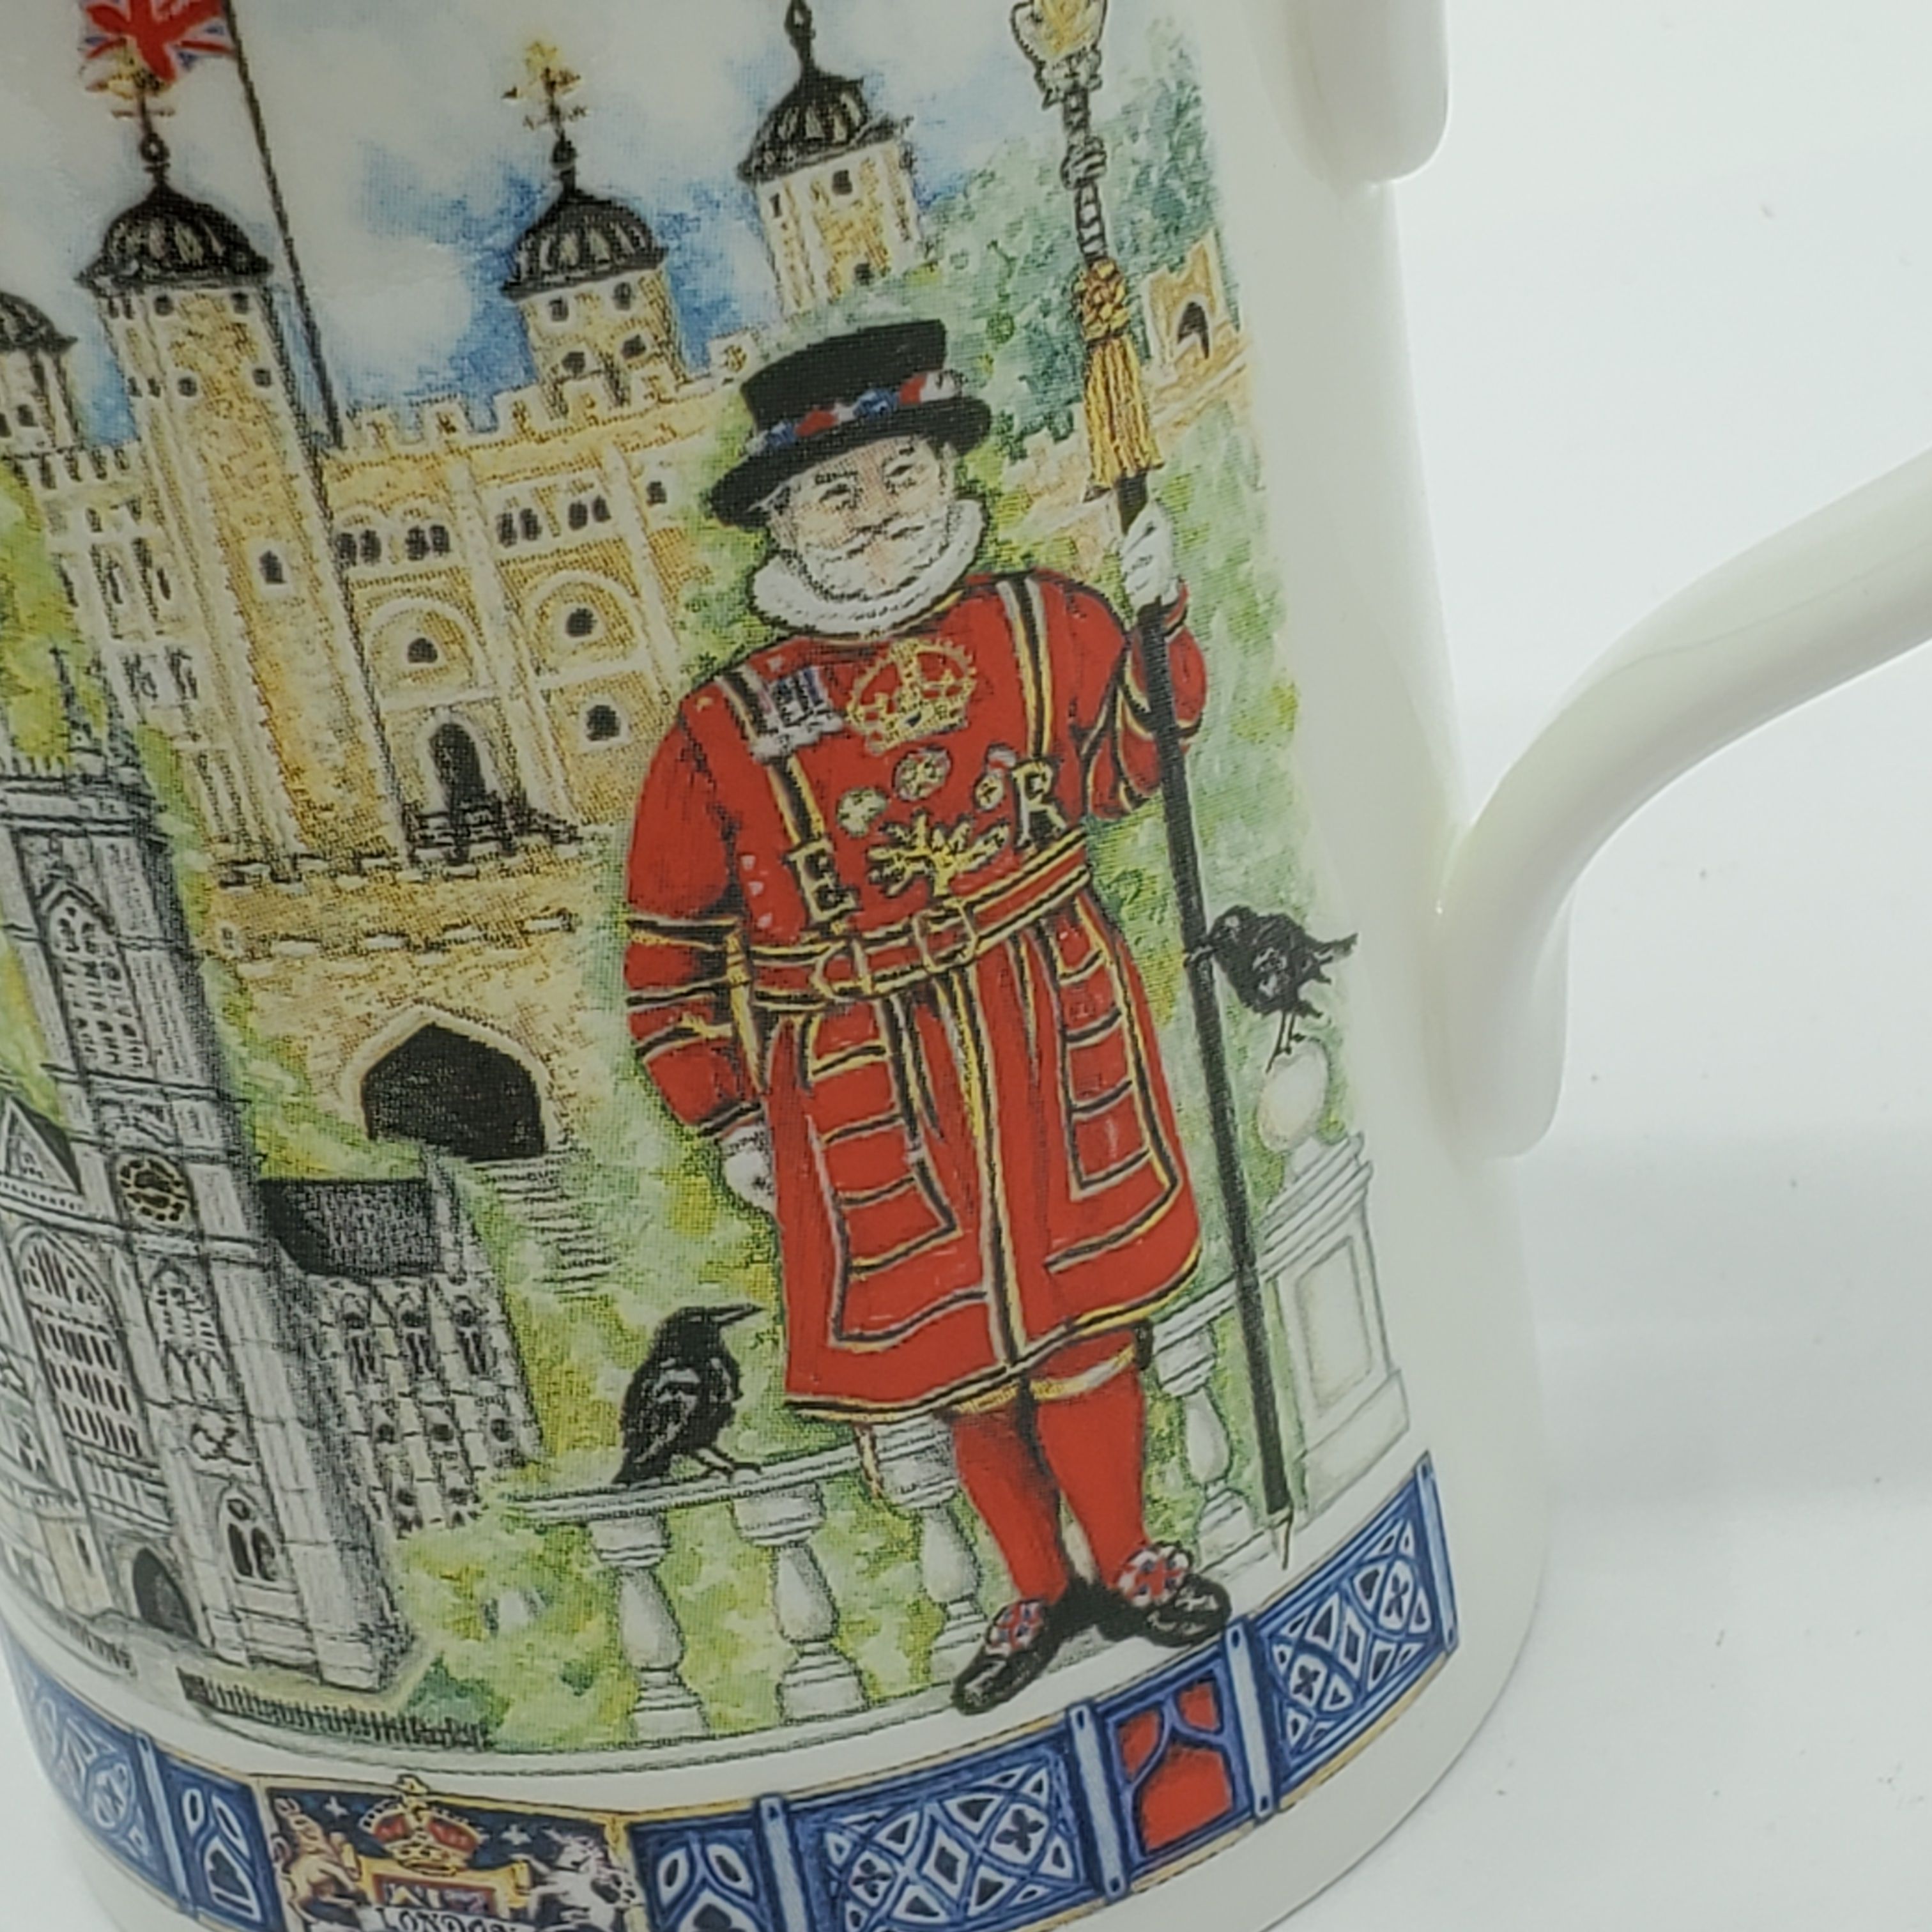 James Sadler London Landmarks Bridge Castle Beefeater Abbey Coffee Tea Mug Cup England. Fine bone china